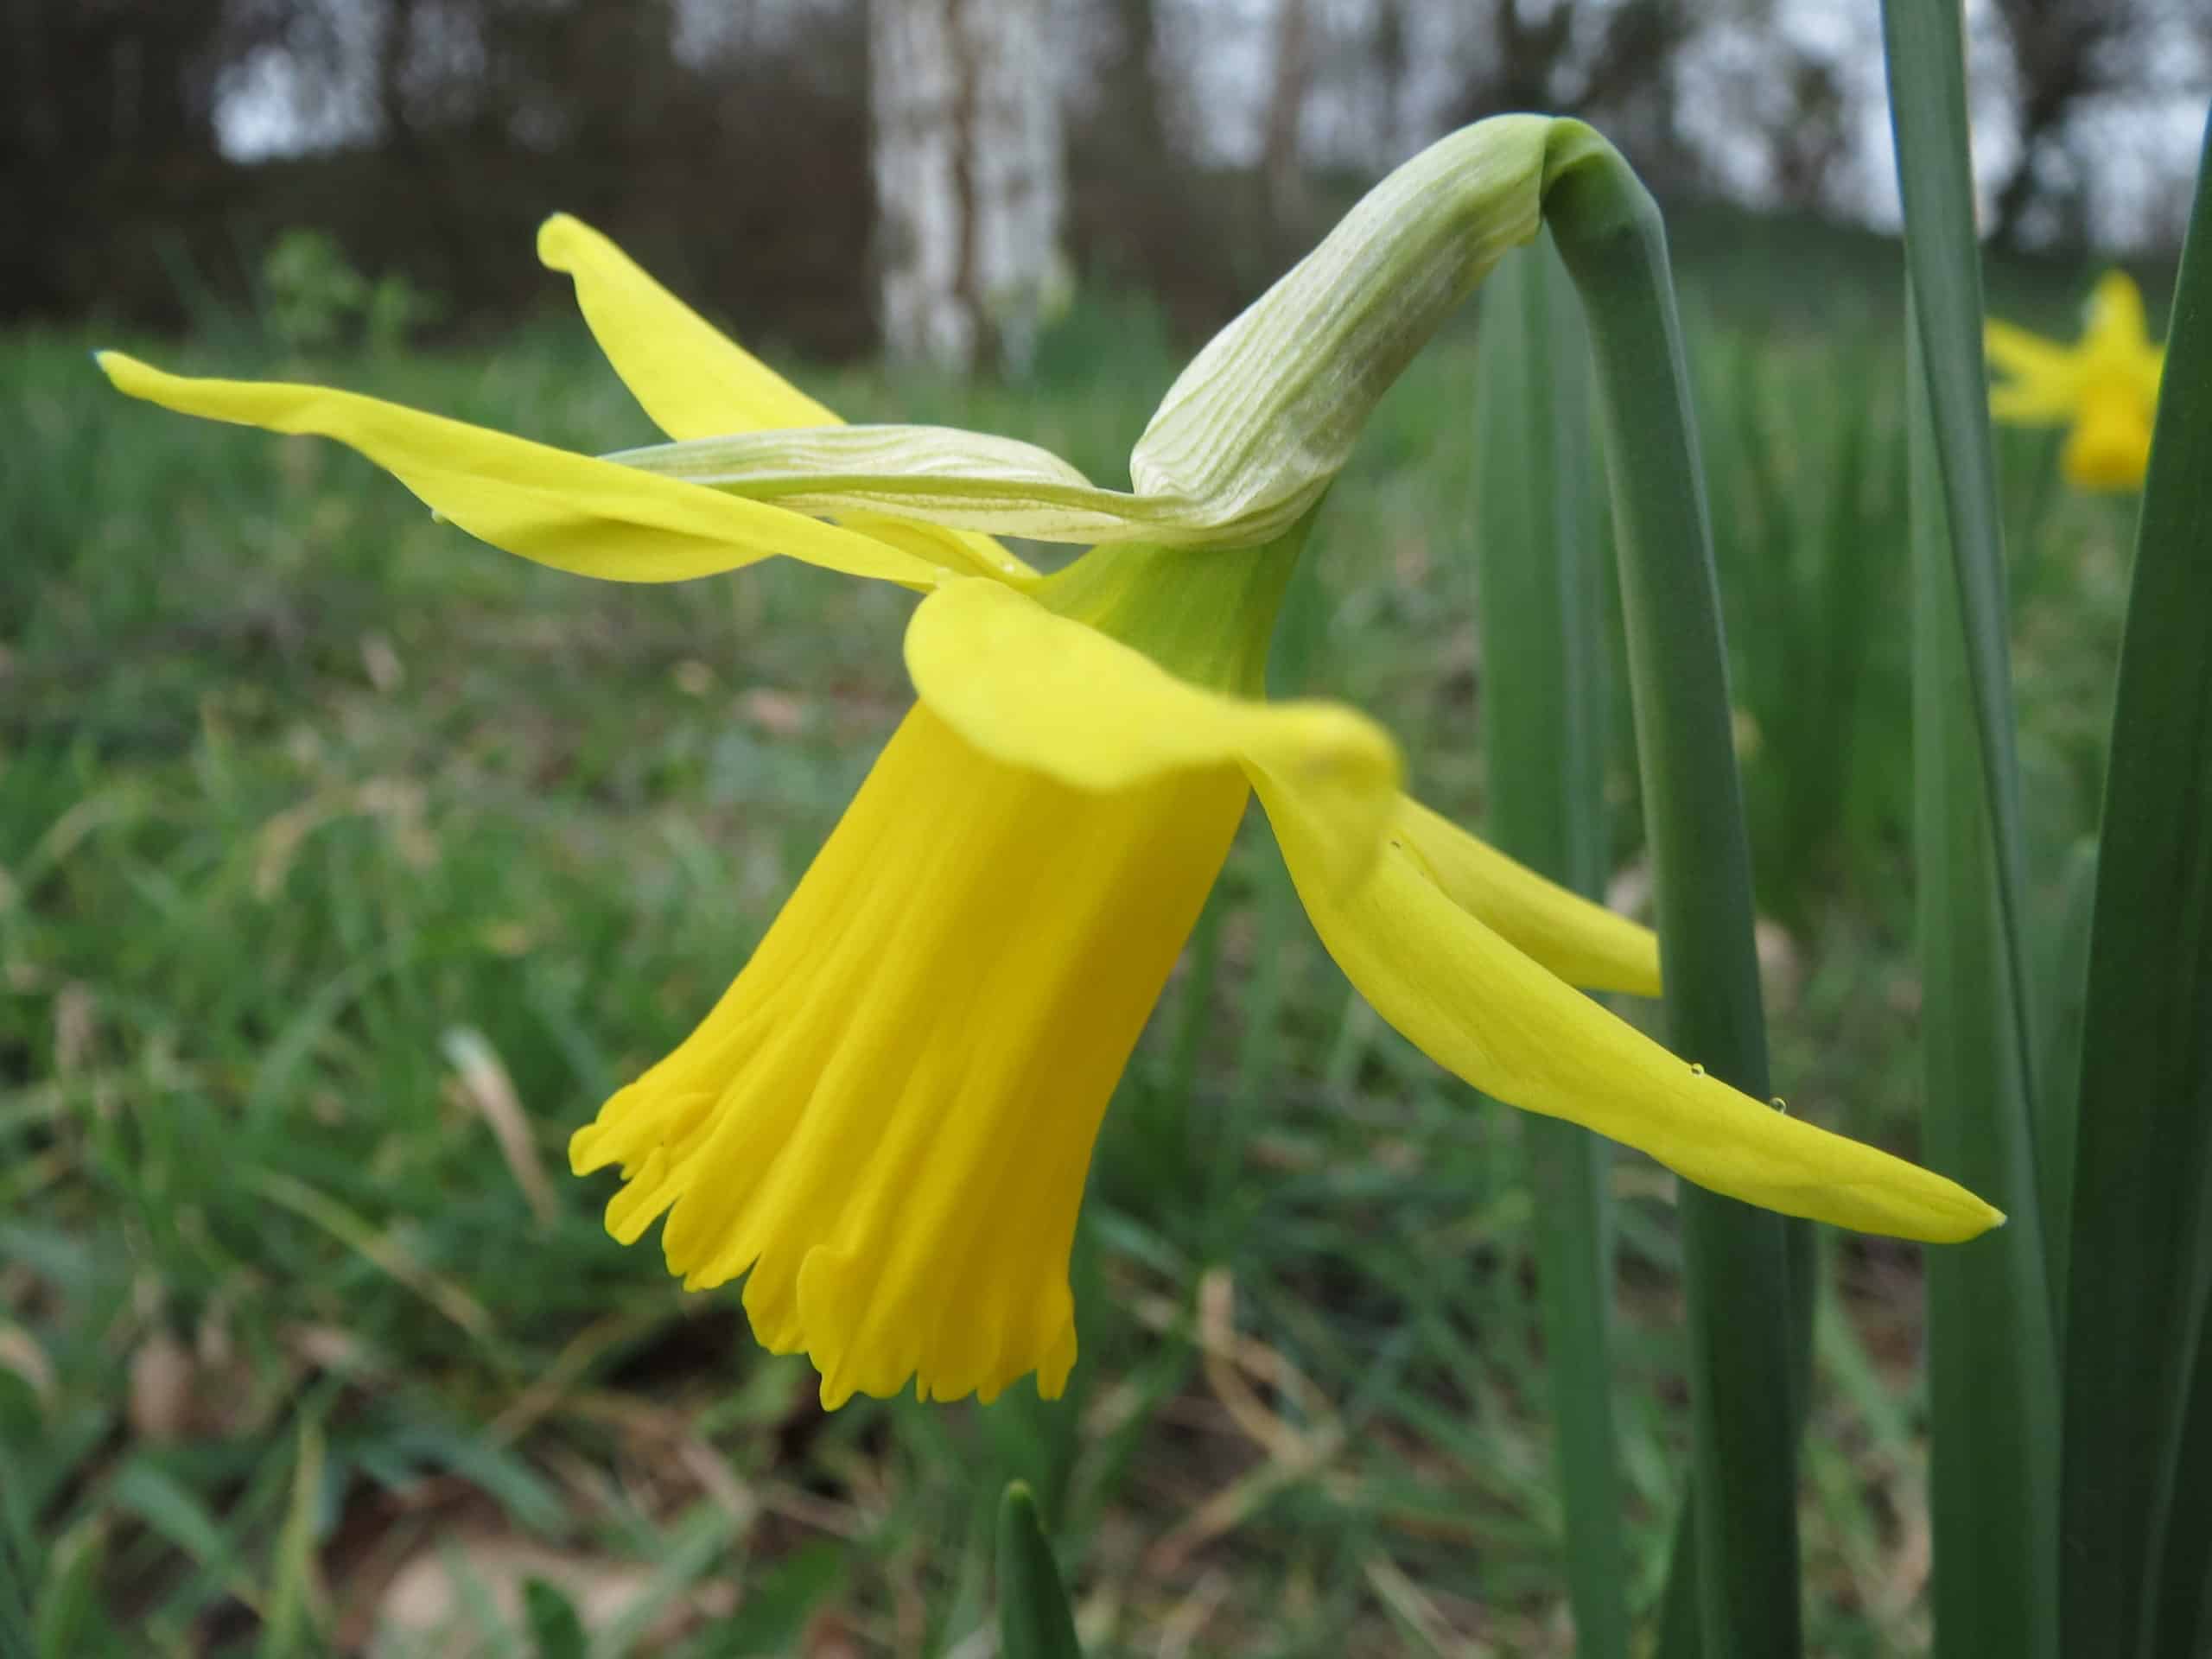 Daffodil. (Narcissus).